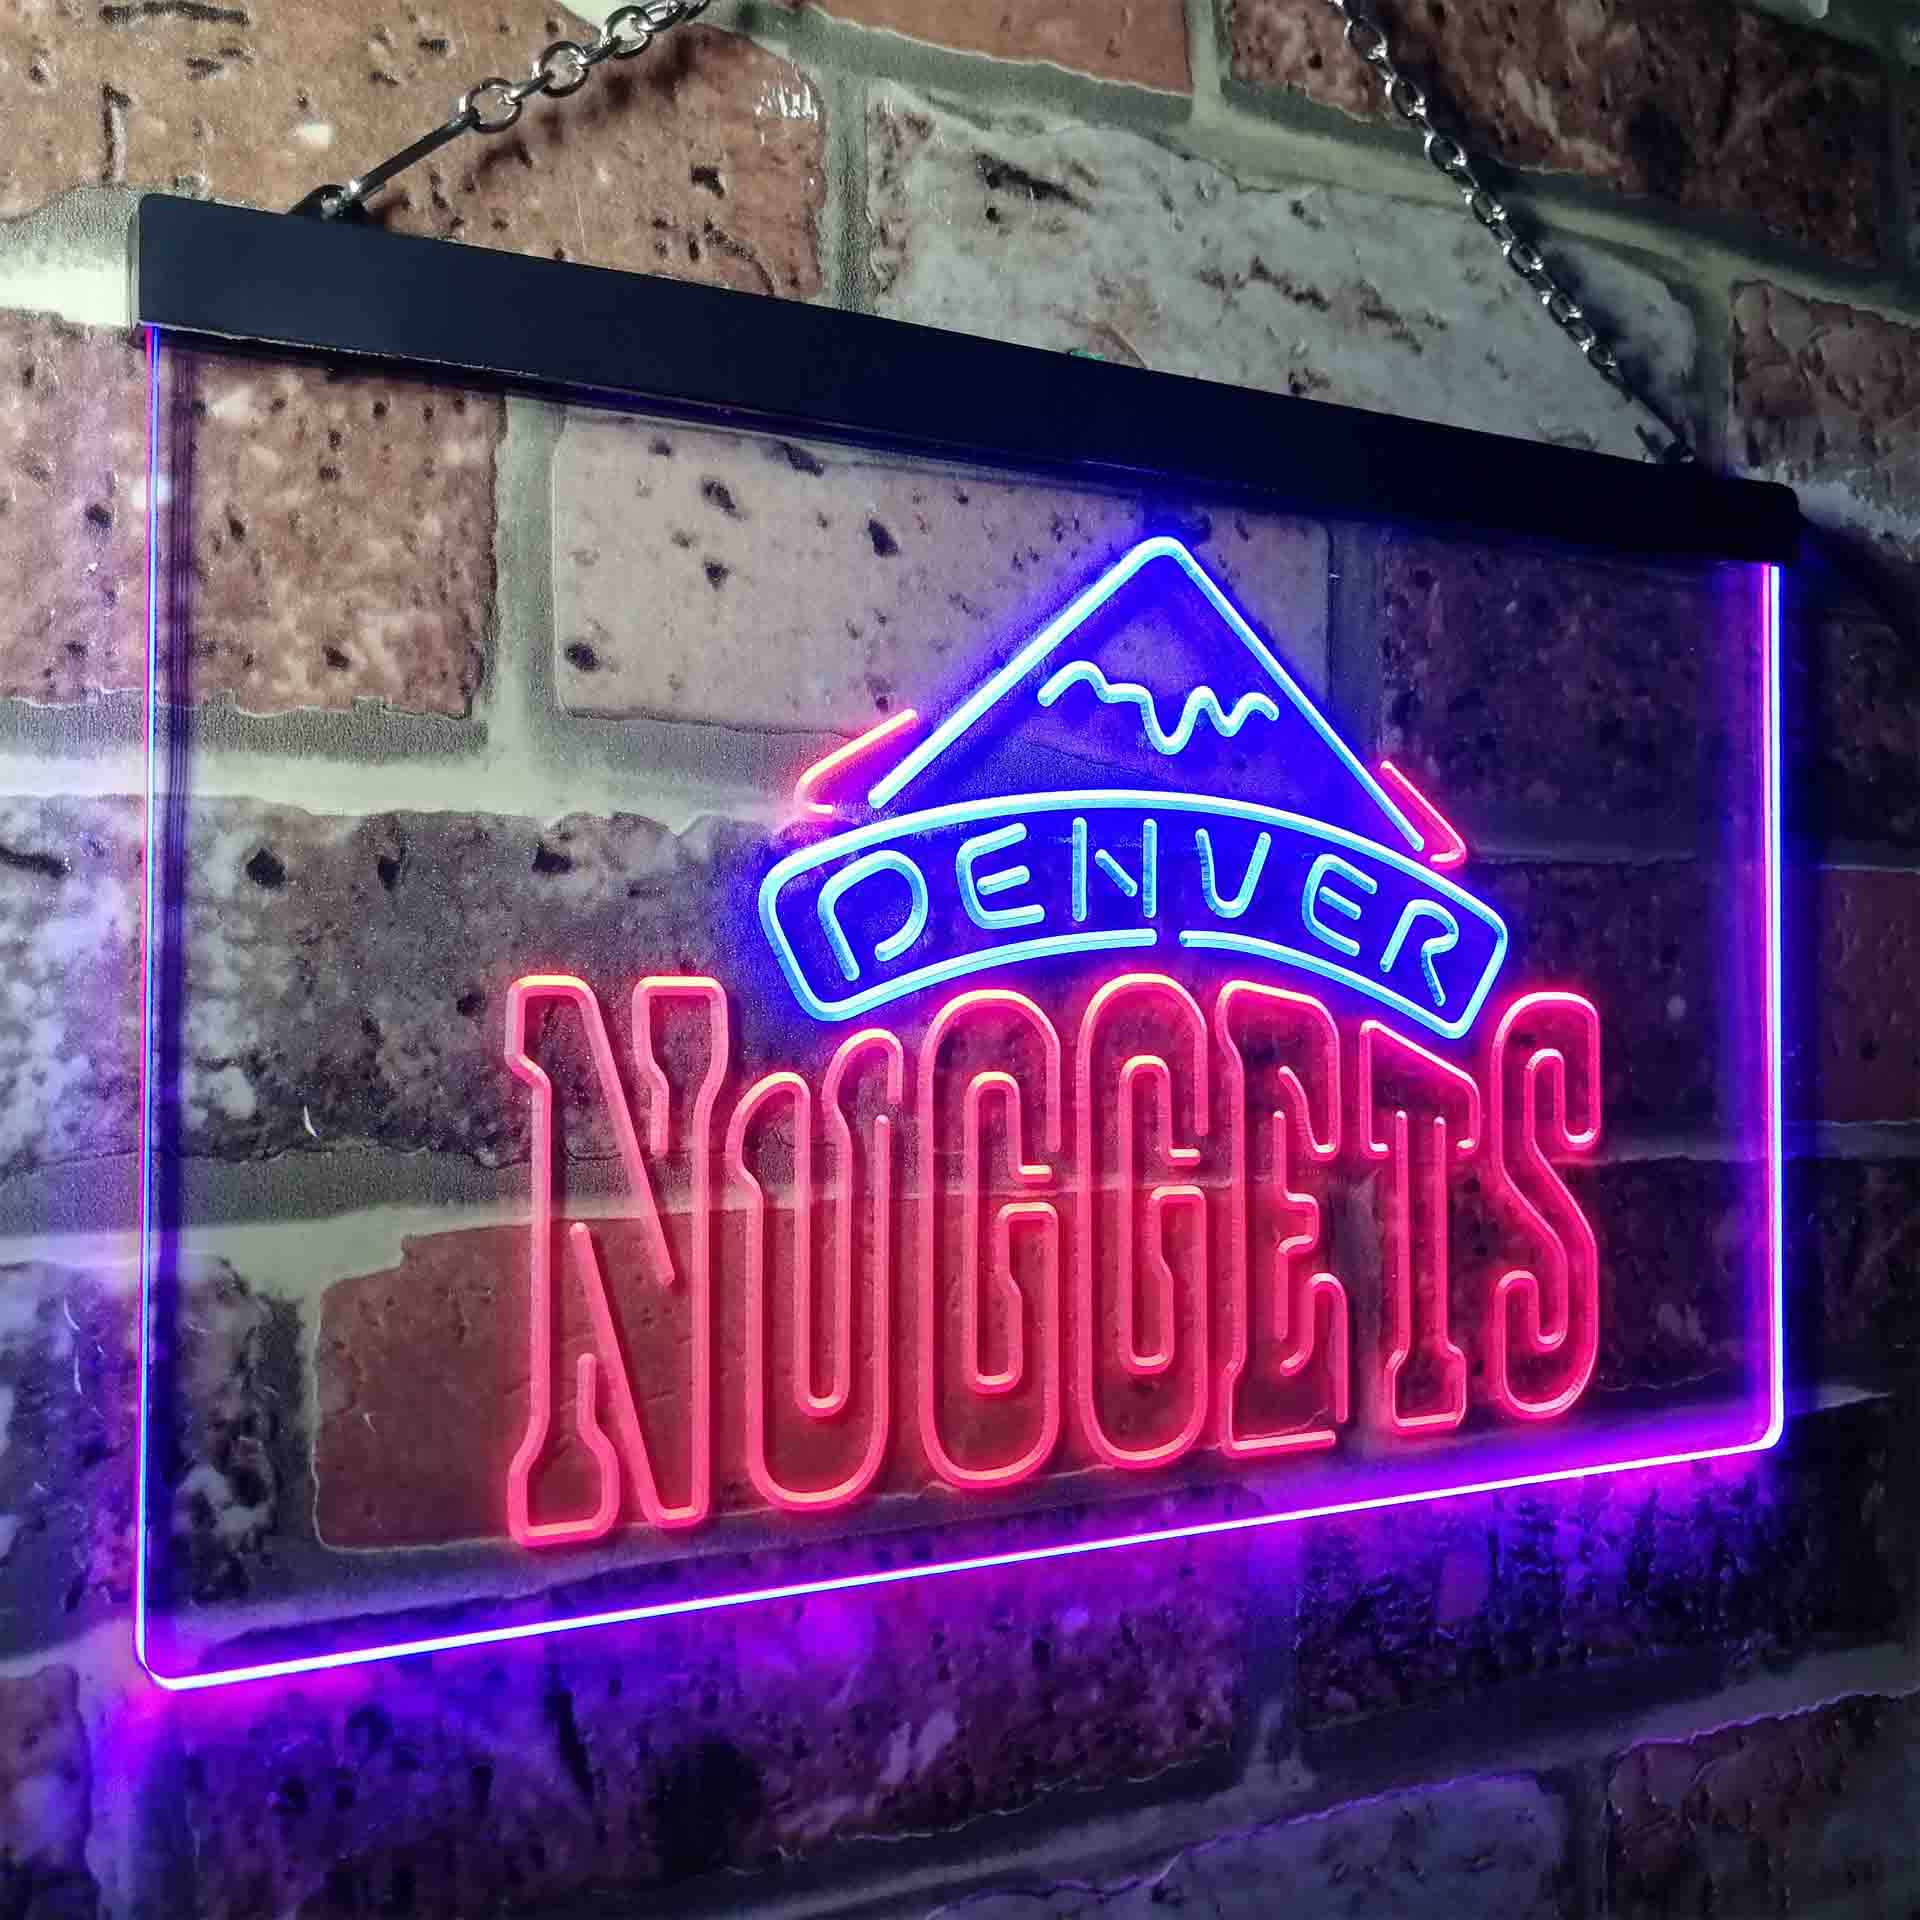 Denvers Sport Club League Team Nuggets LED Neon Sign